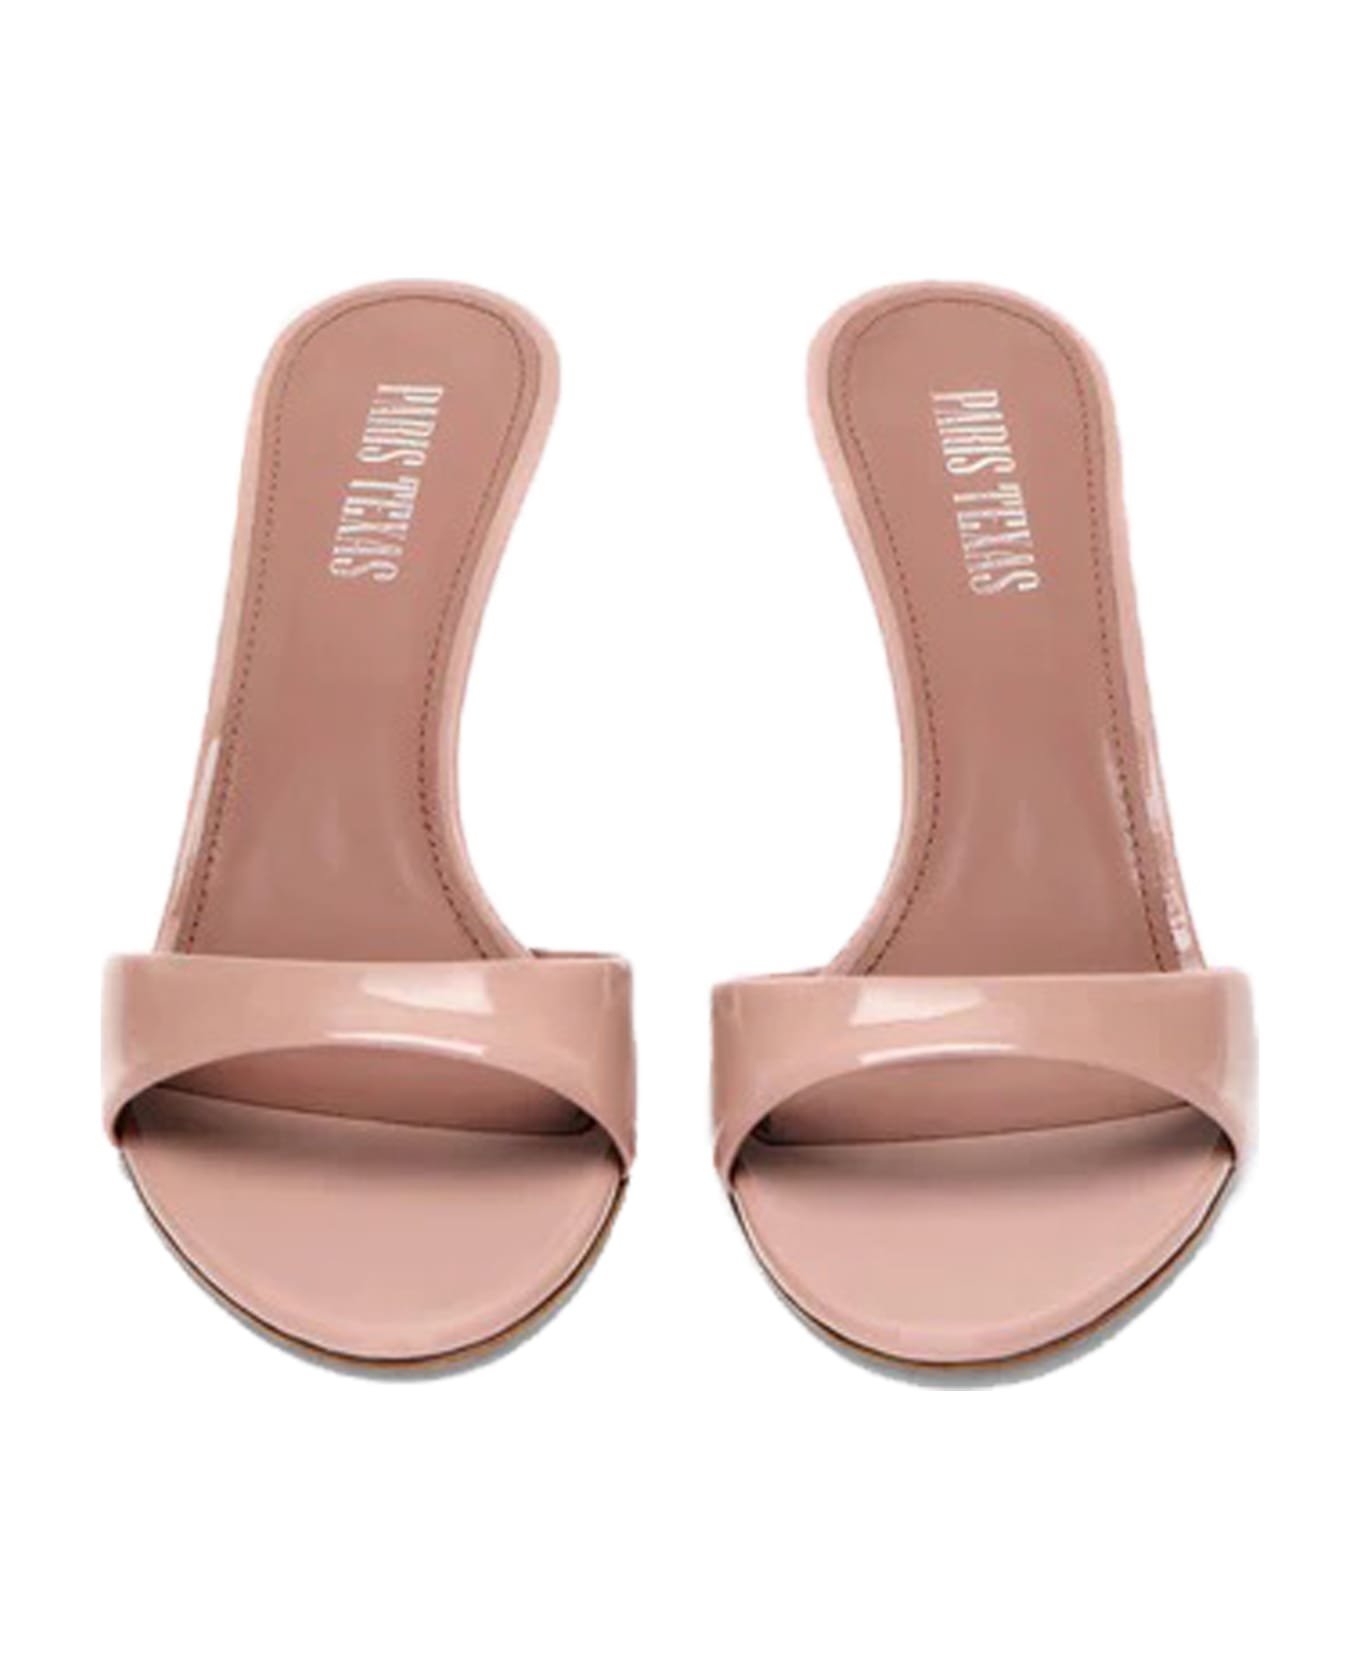 Paris Texas Heeled Sandals - Pink